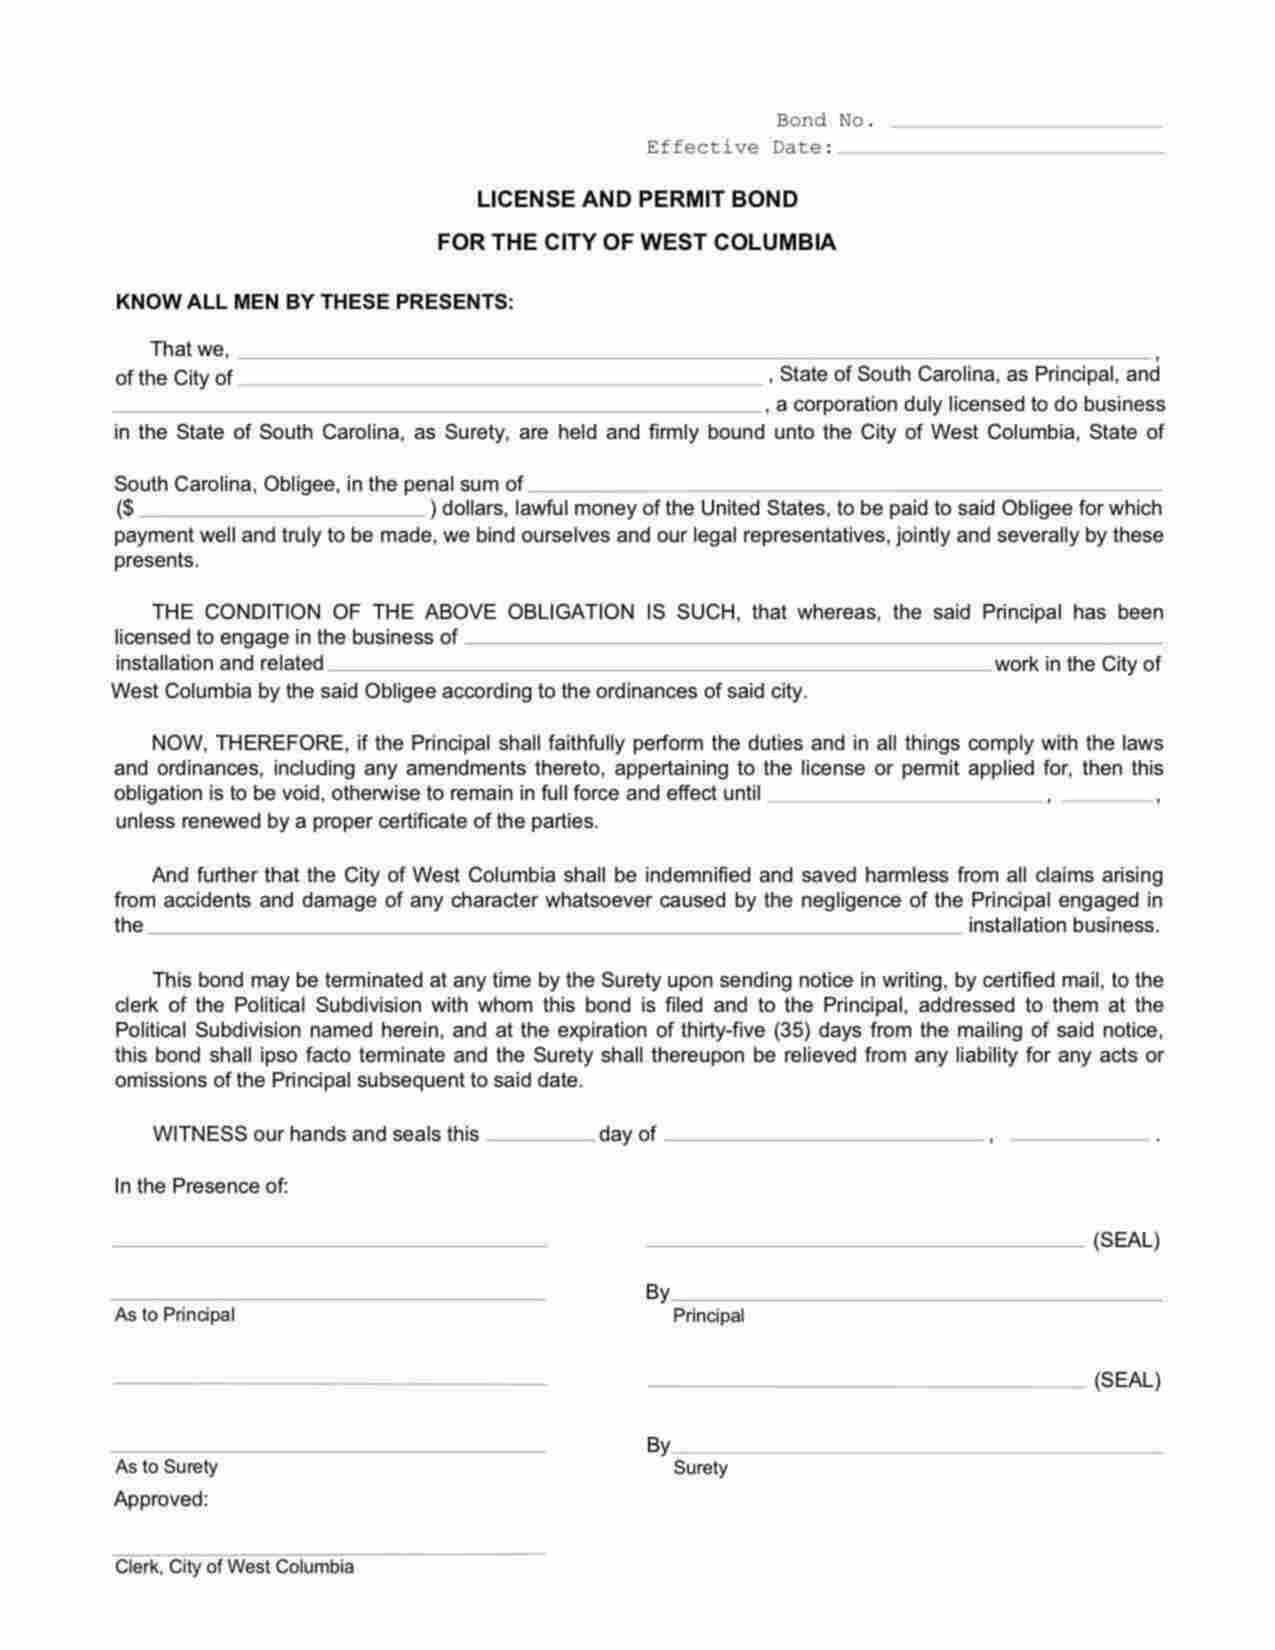 South Carolina License/Permit Bond Form